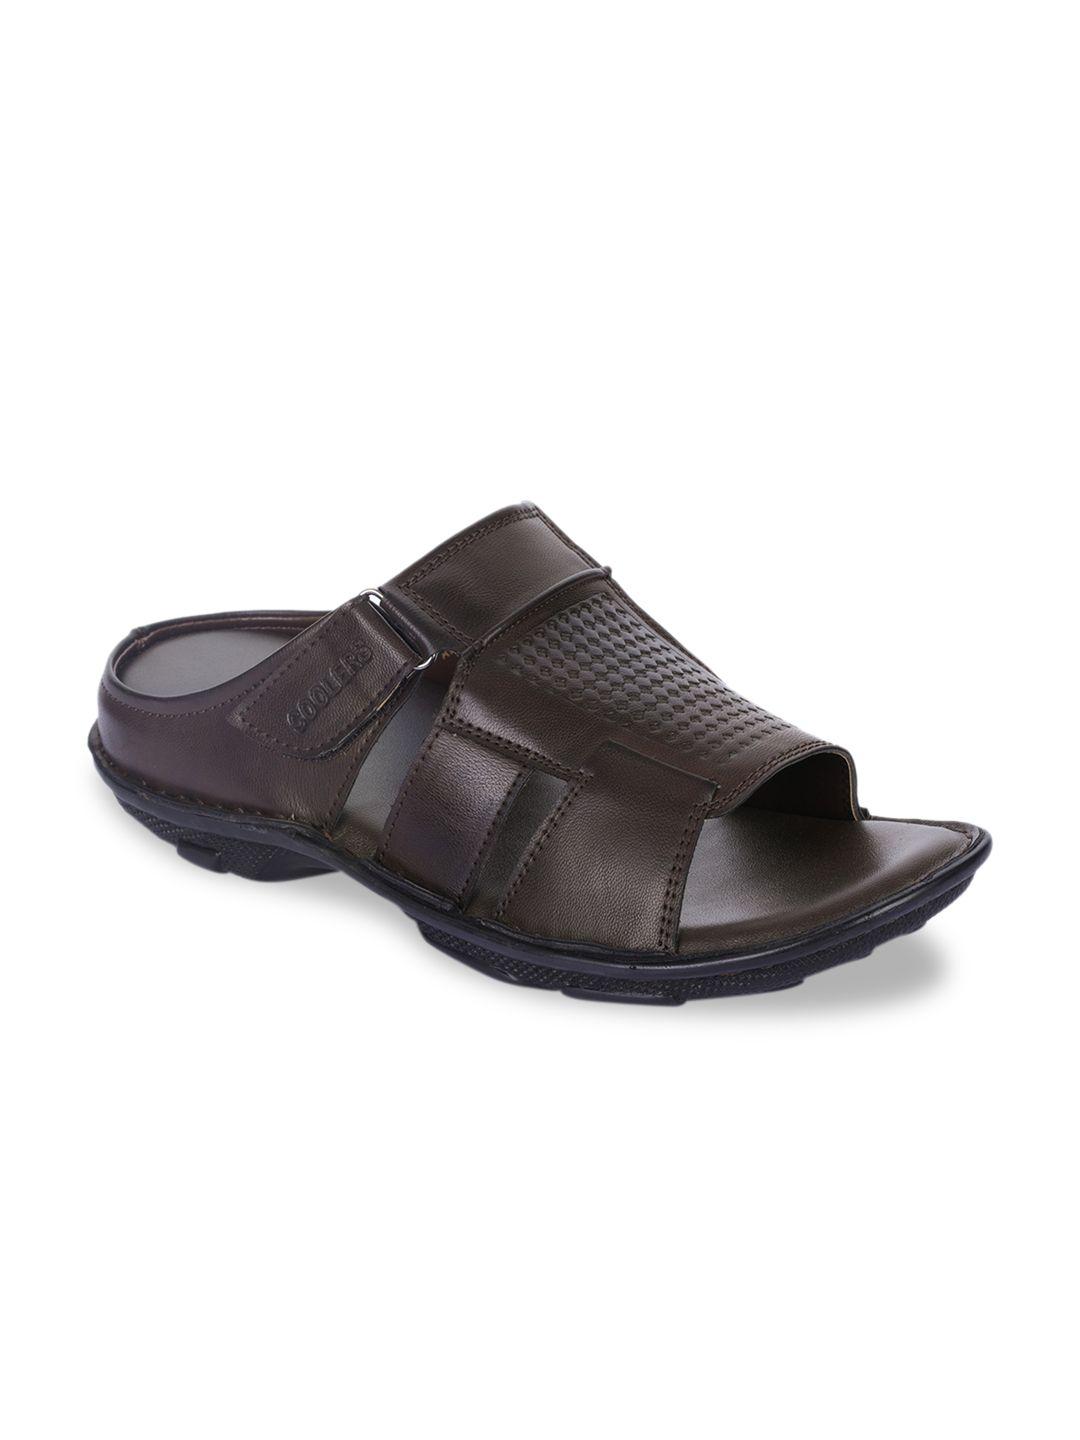 liberty men brown leather comfort sandals